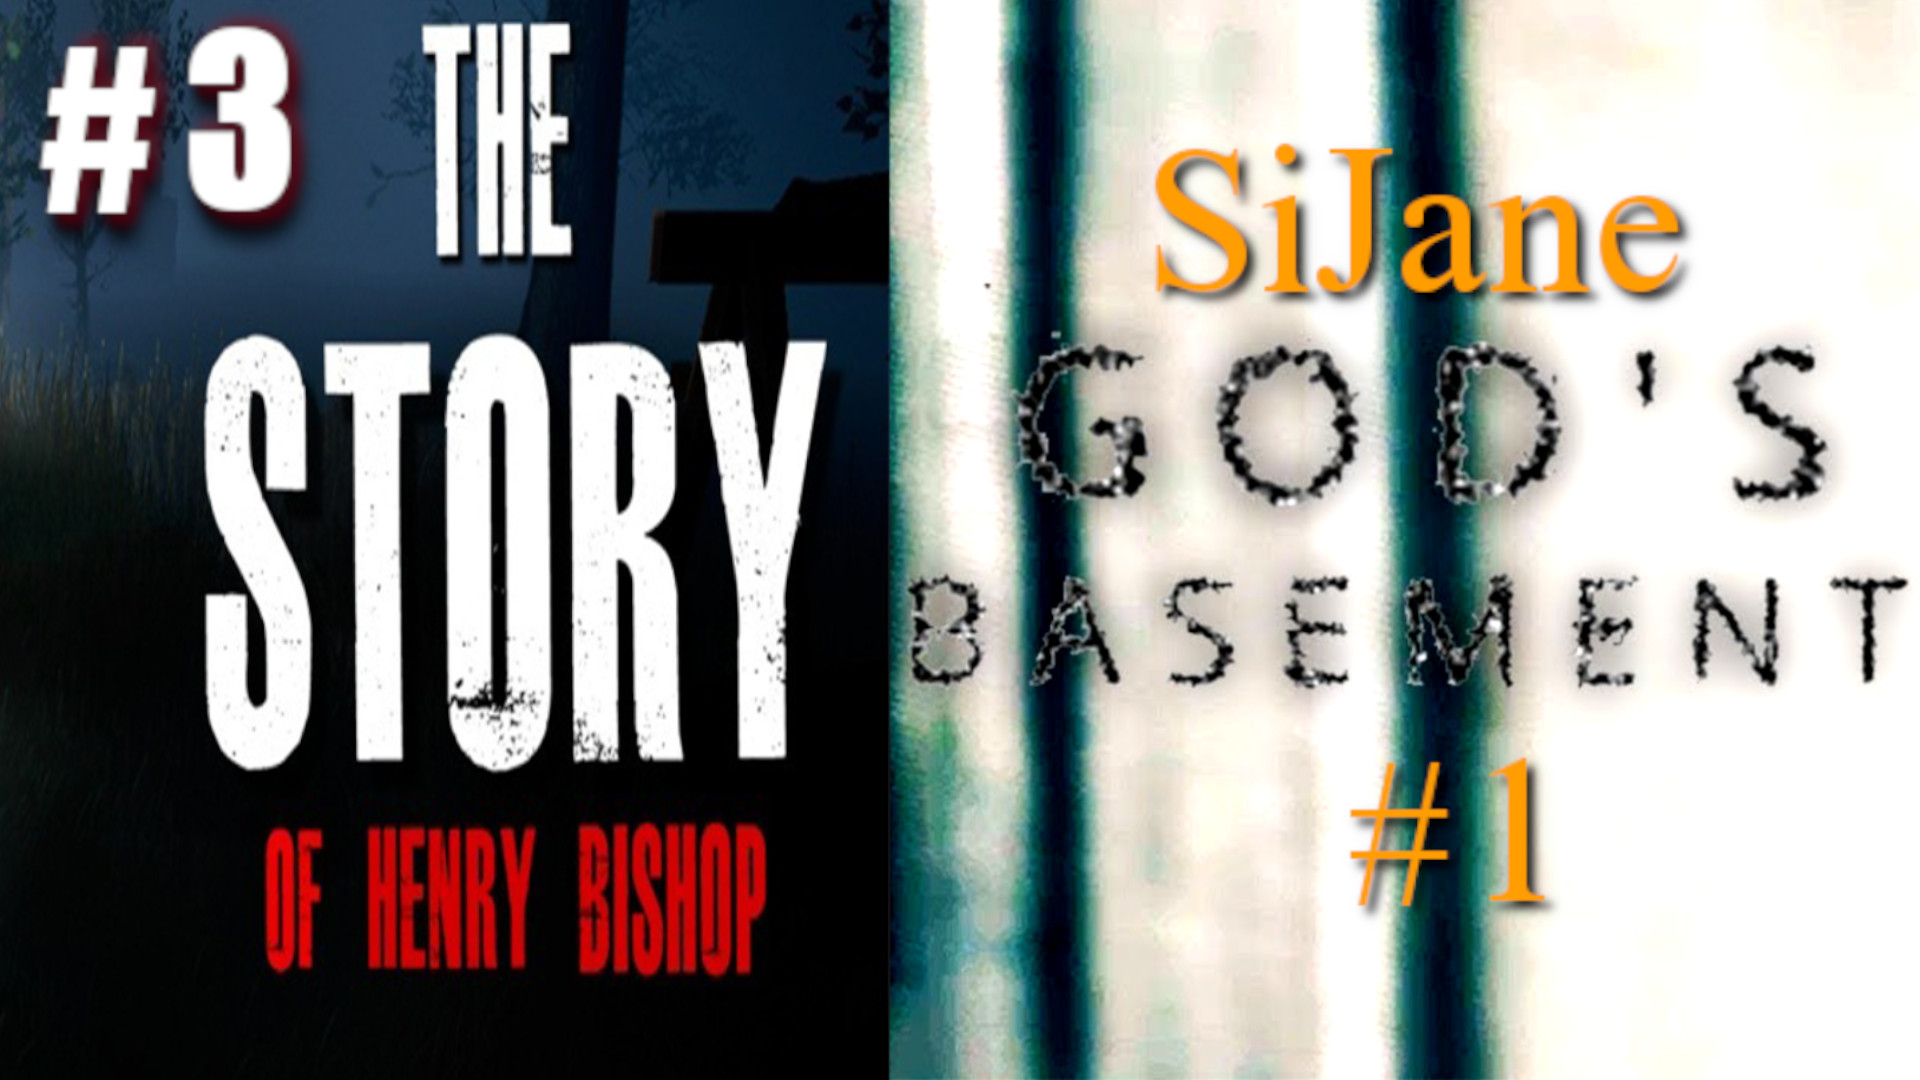 The Story of Henry Bishop  Финал ??? God's Basement  Начало #1